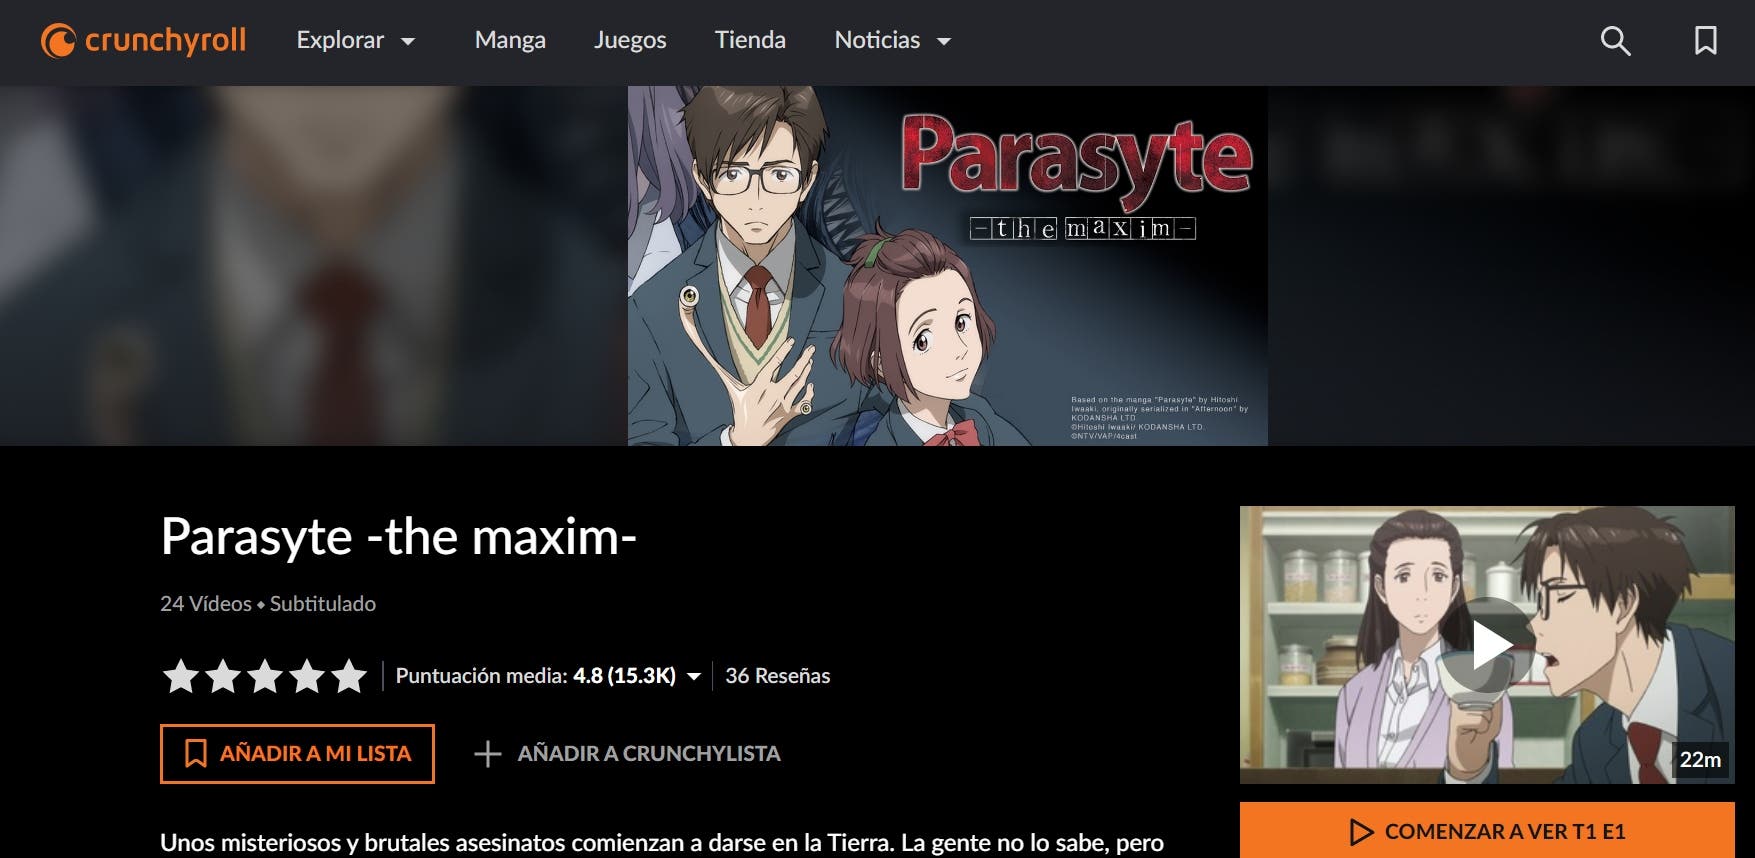 Parasyte (Kiseiju): dónde ver todo el anime al completo